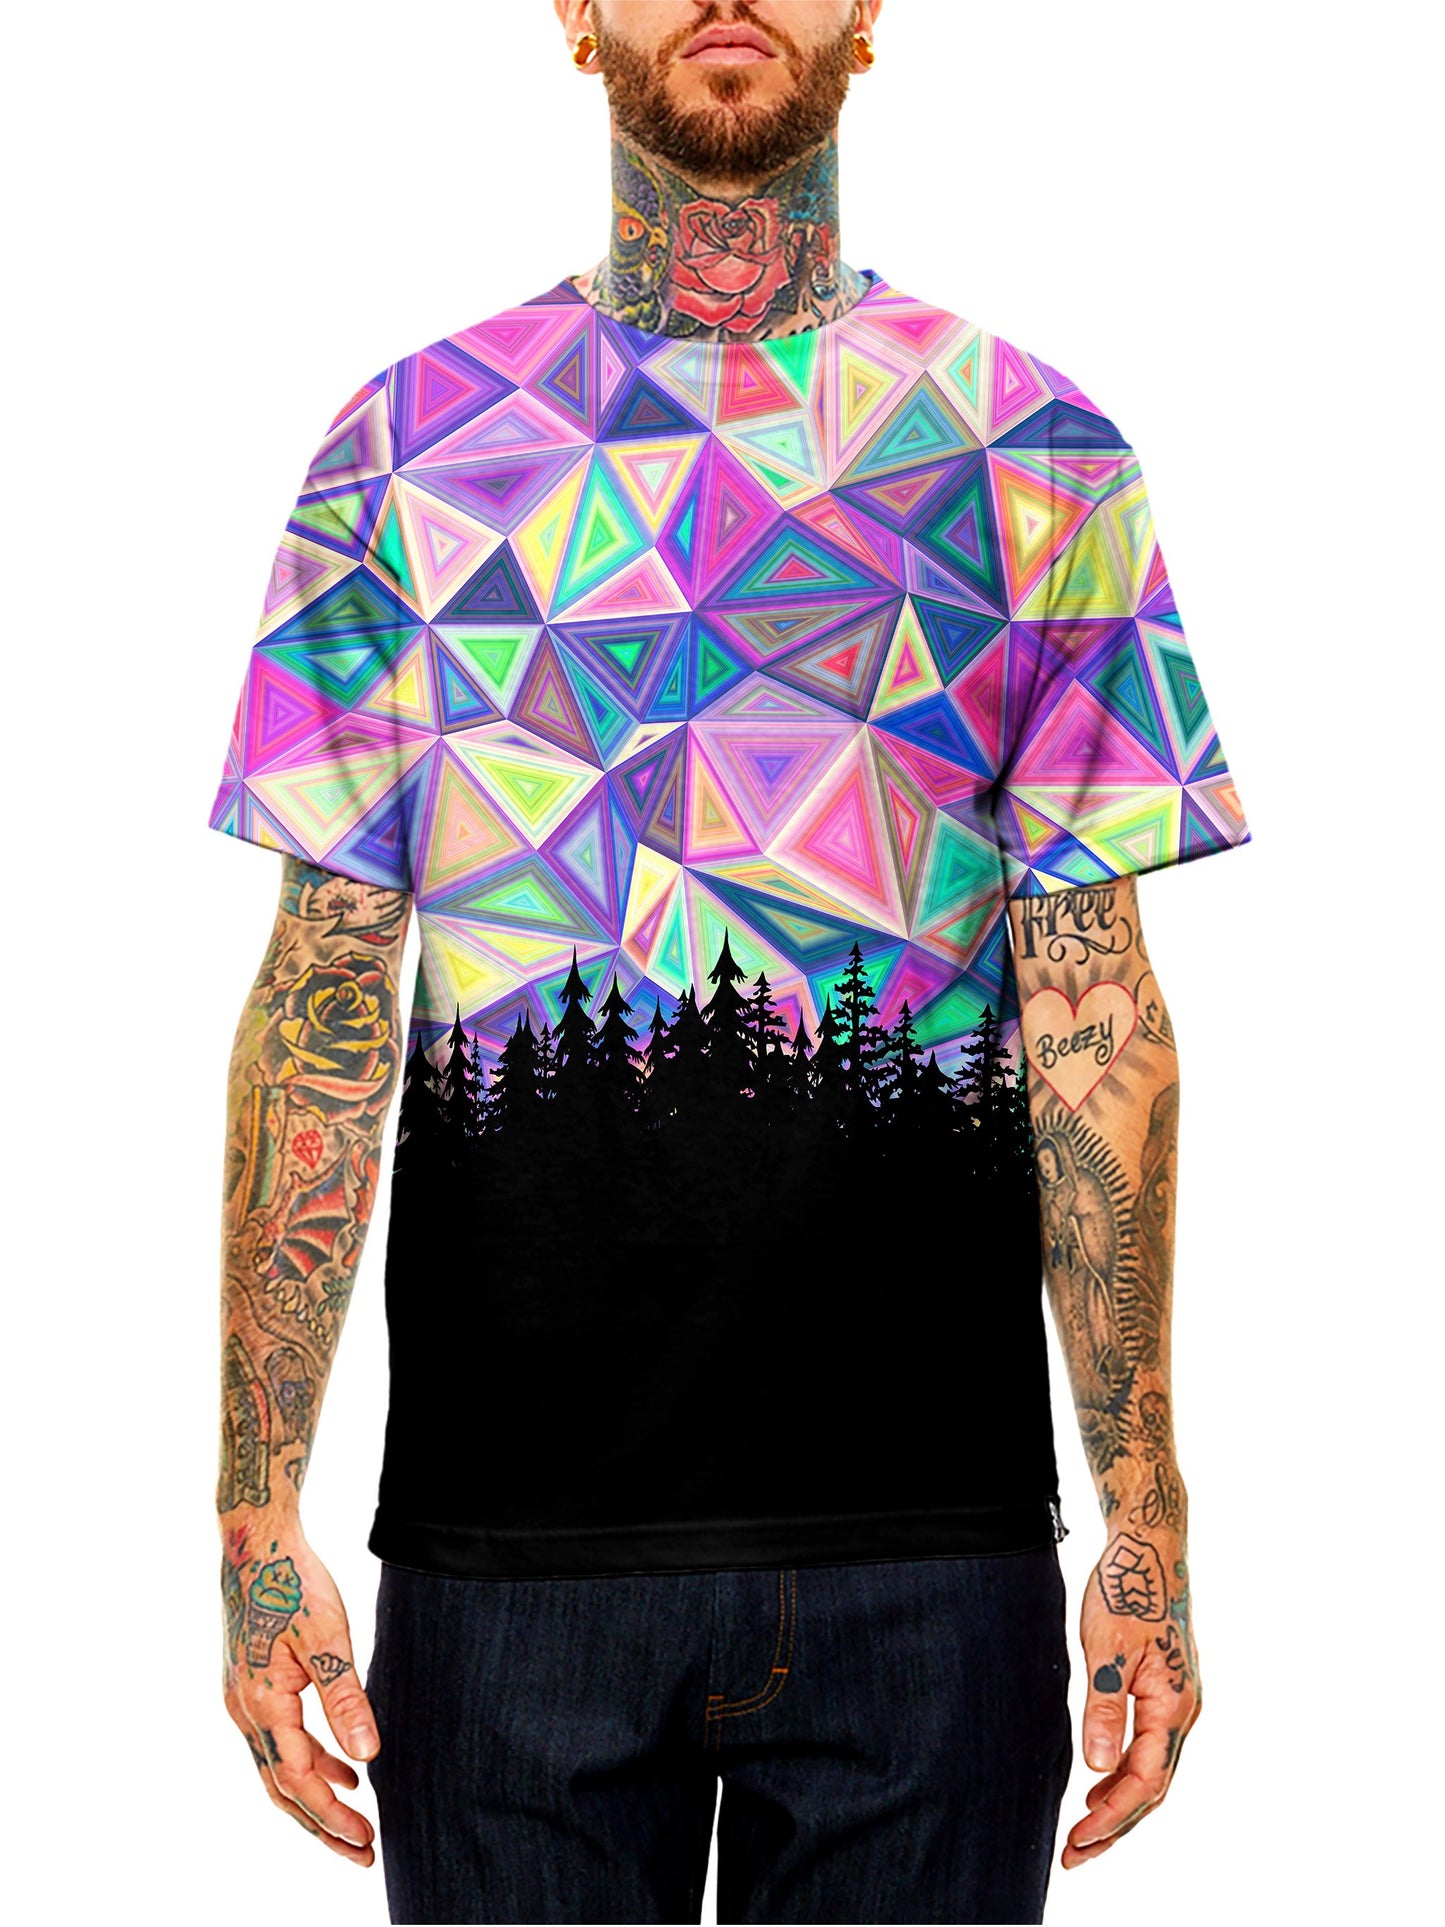 Model wearing GratefullyDyed Apparel rainbow geometric forest unisex t-shirt.